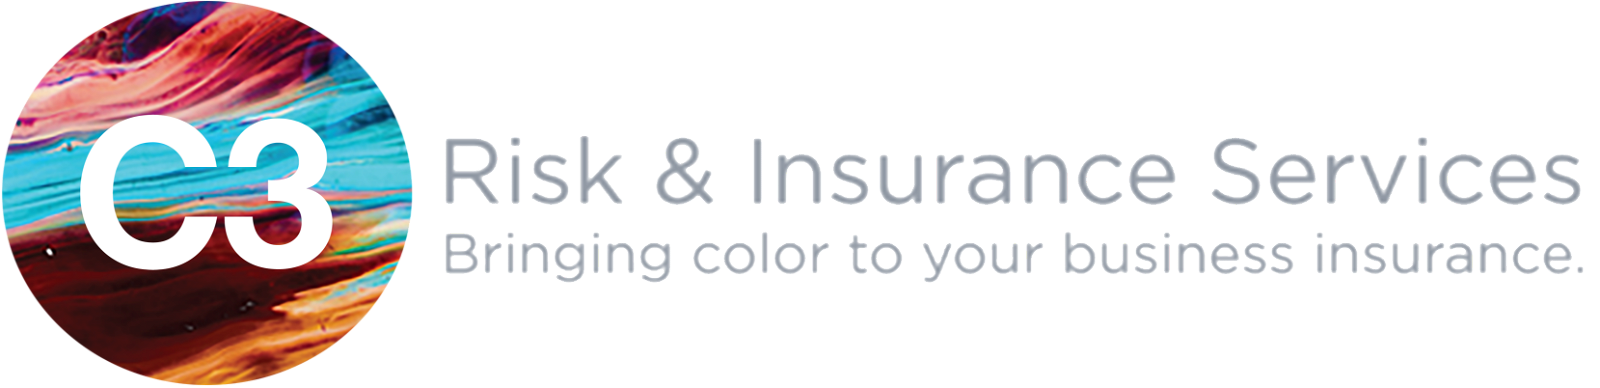 C 3 Risk & Insurance Services